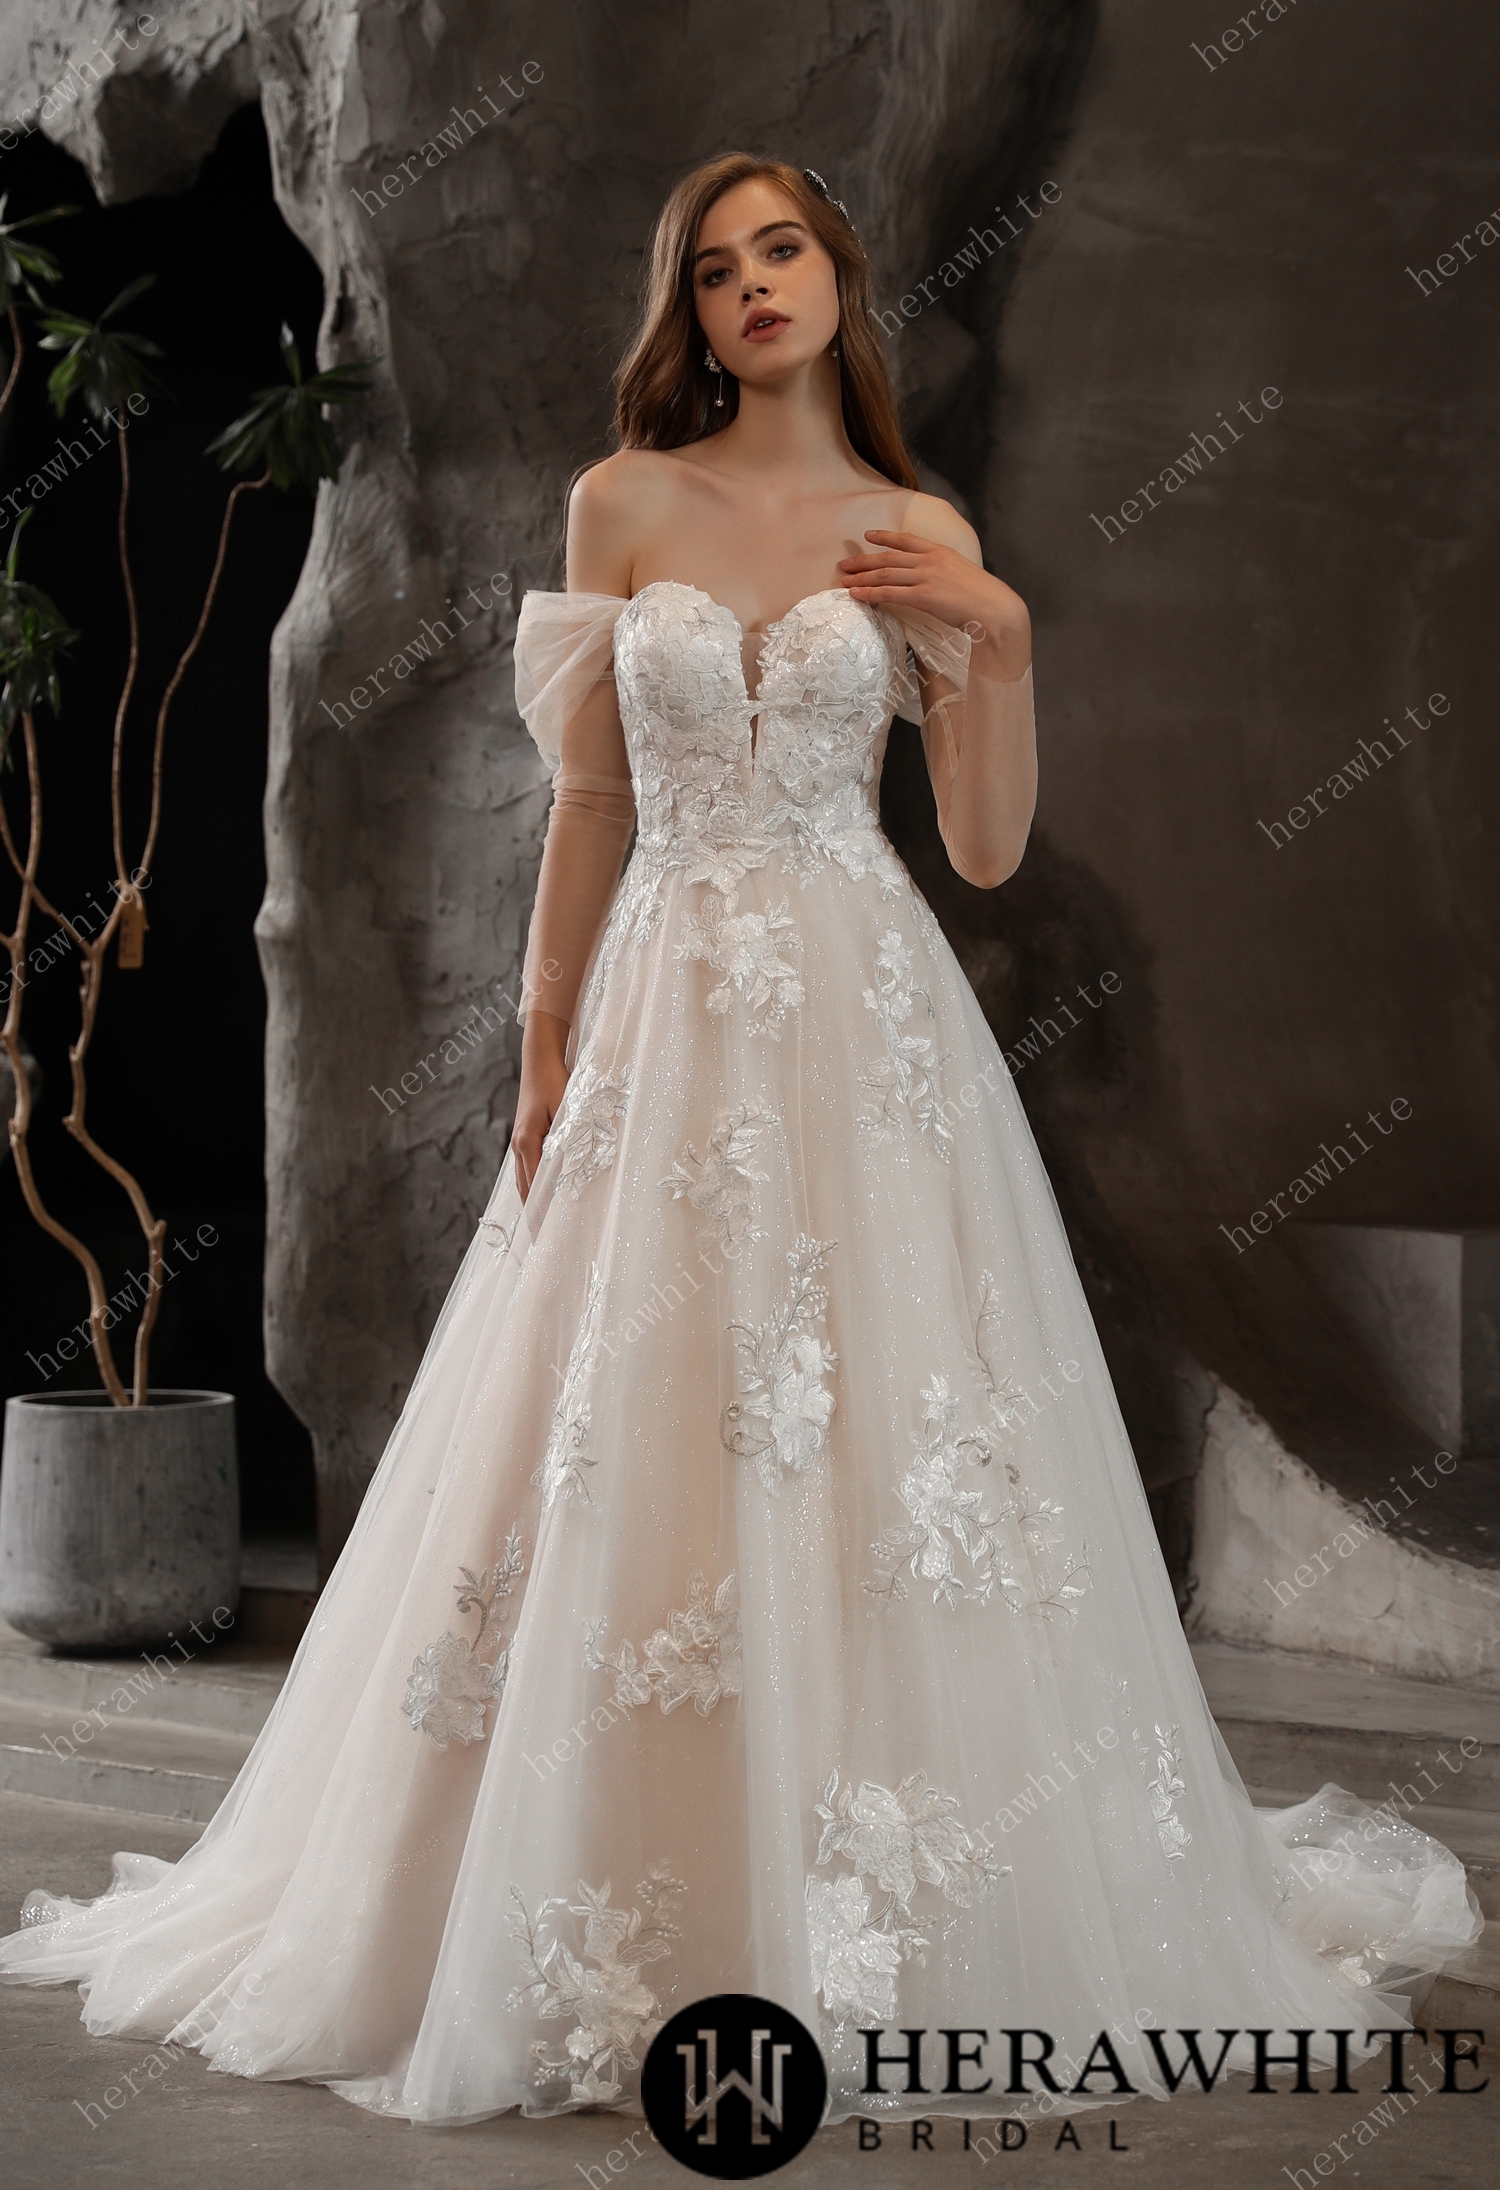 Off-the-Shoulder Romantic Ballgown Glamorous Floral Motifs Wedding Dress